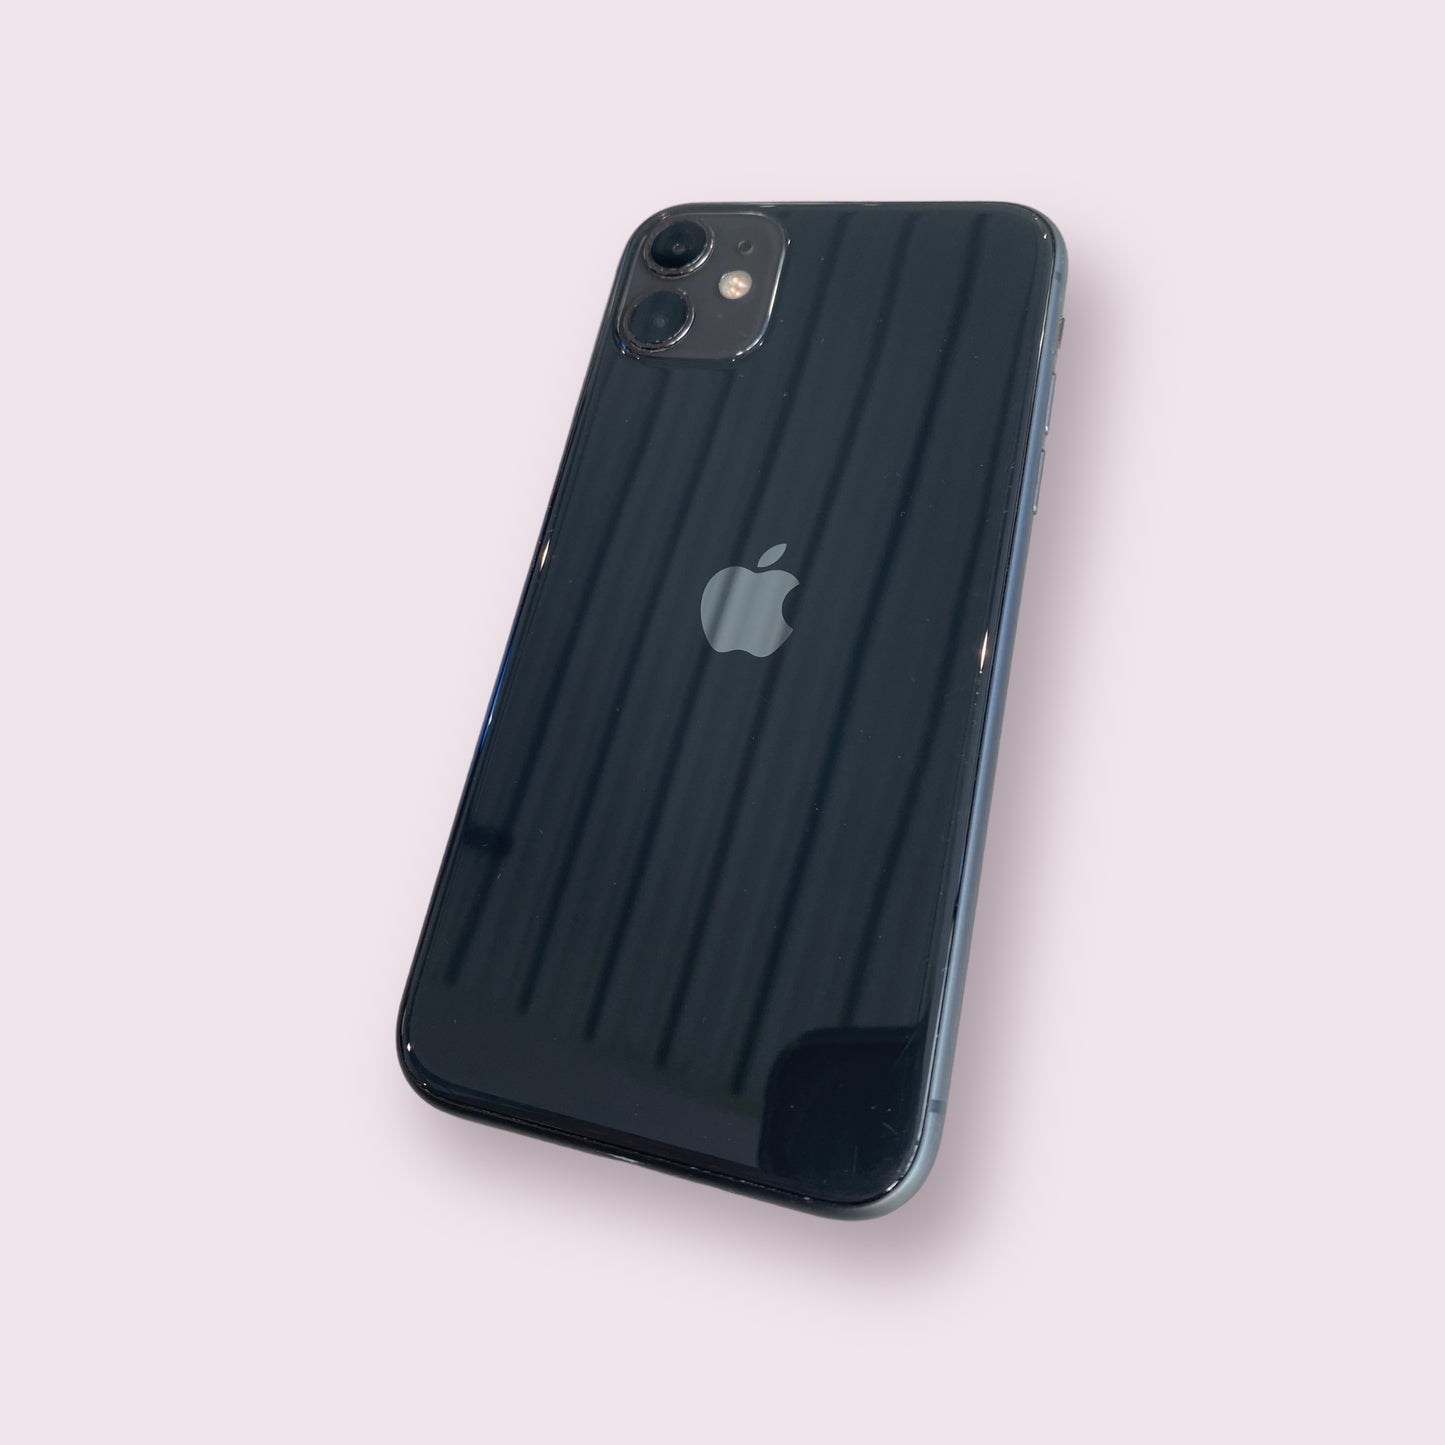 Apple iPhone 11 128GB Black Smartphone - Unlocked - Grade B